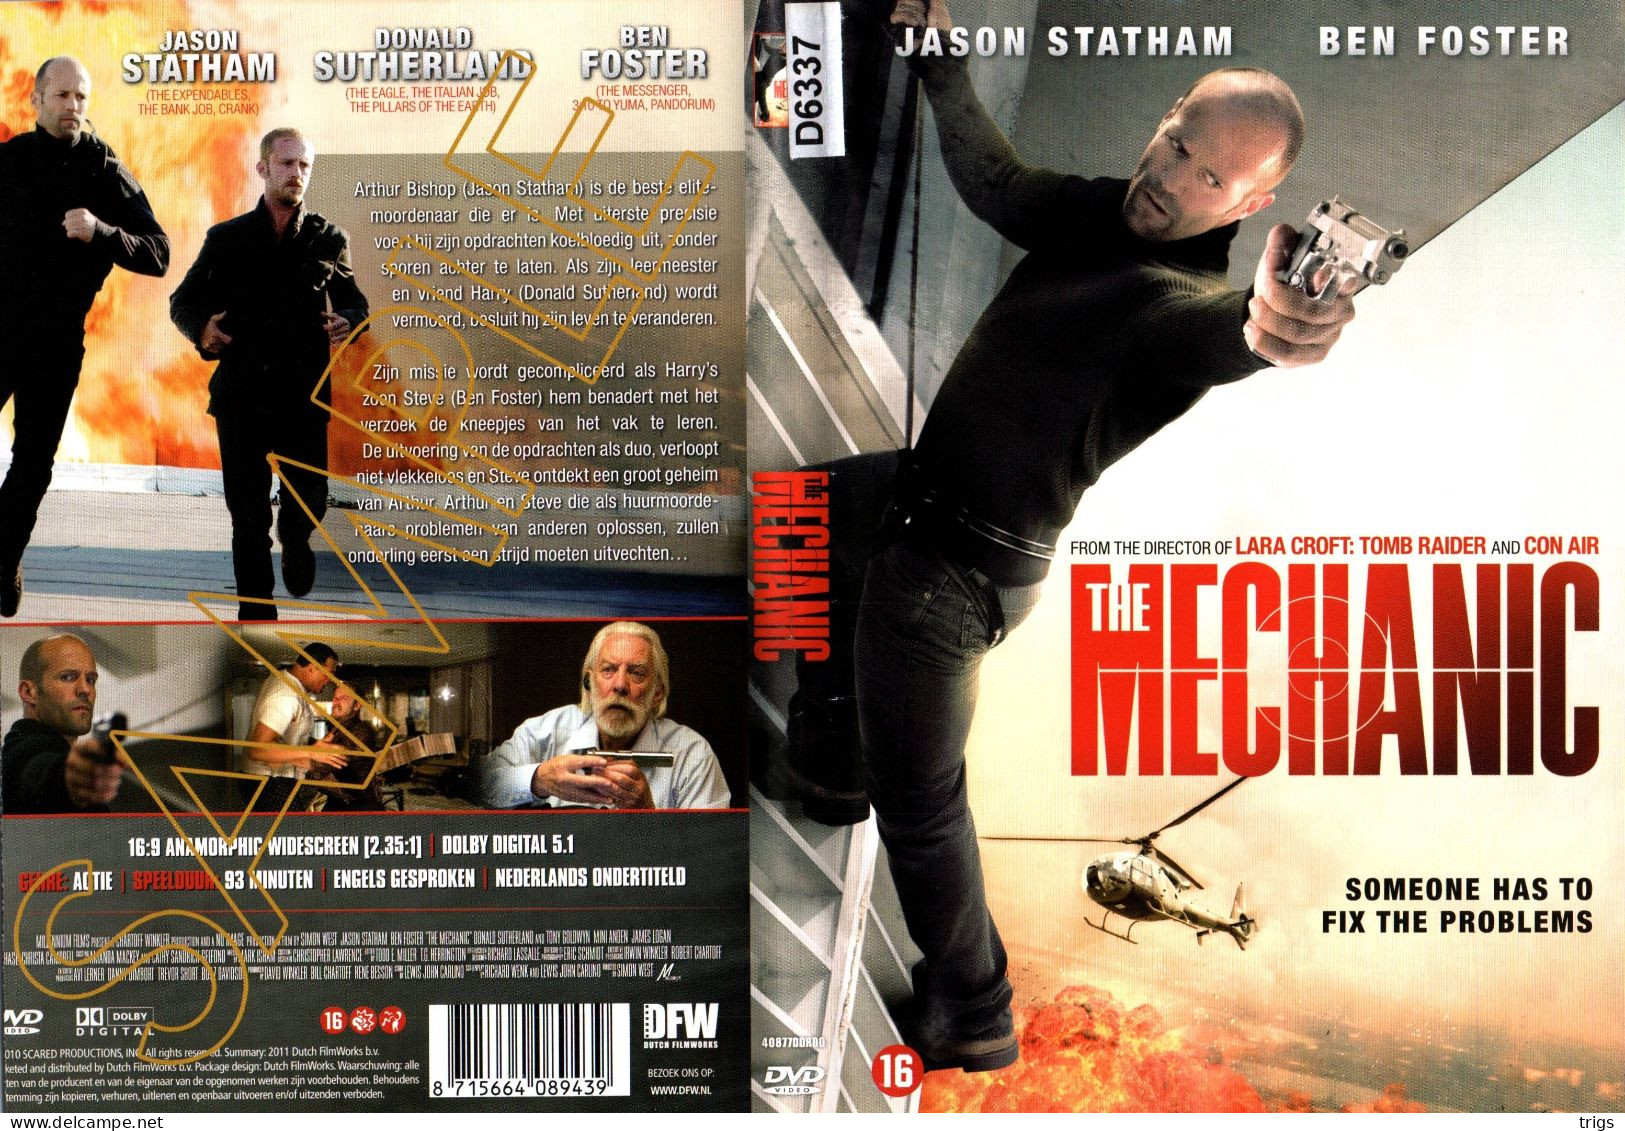 DVD - The Mechanic - Action, Adventure